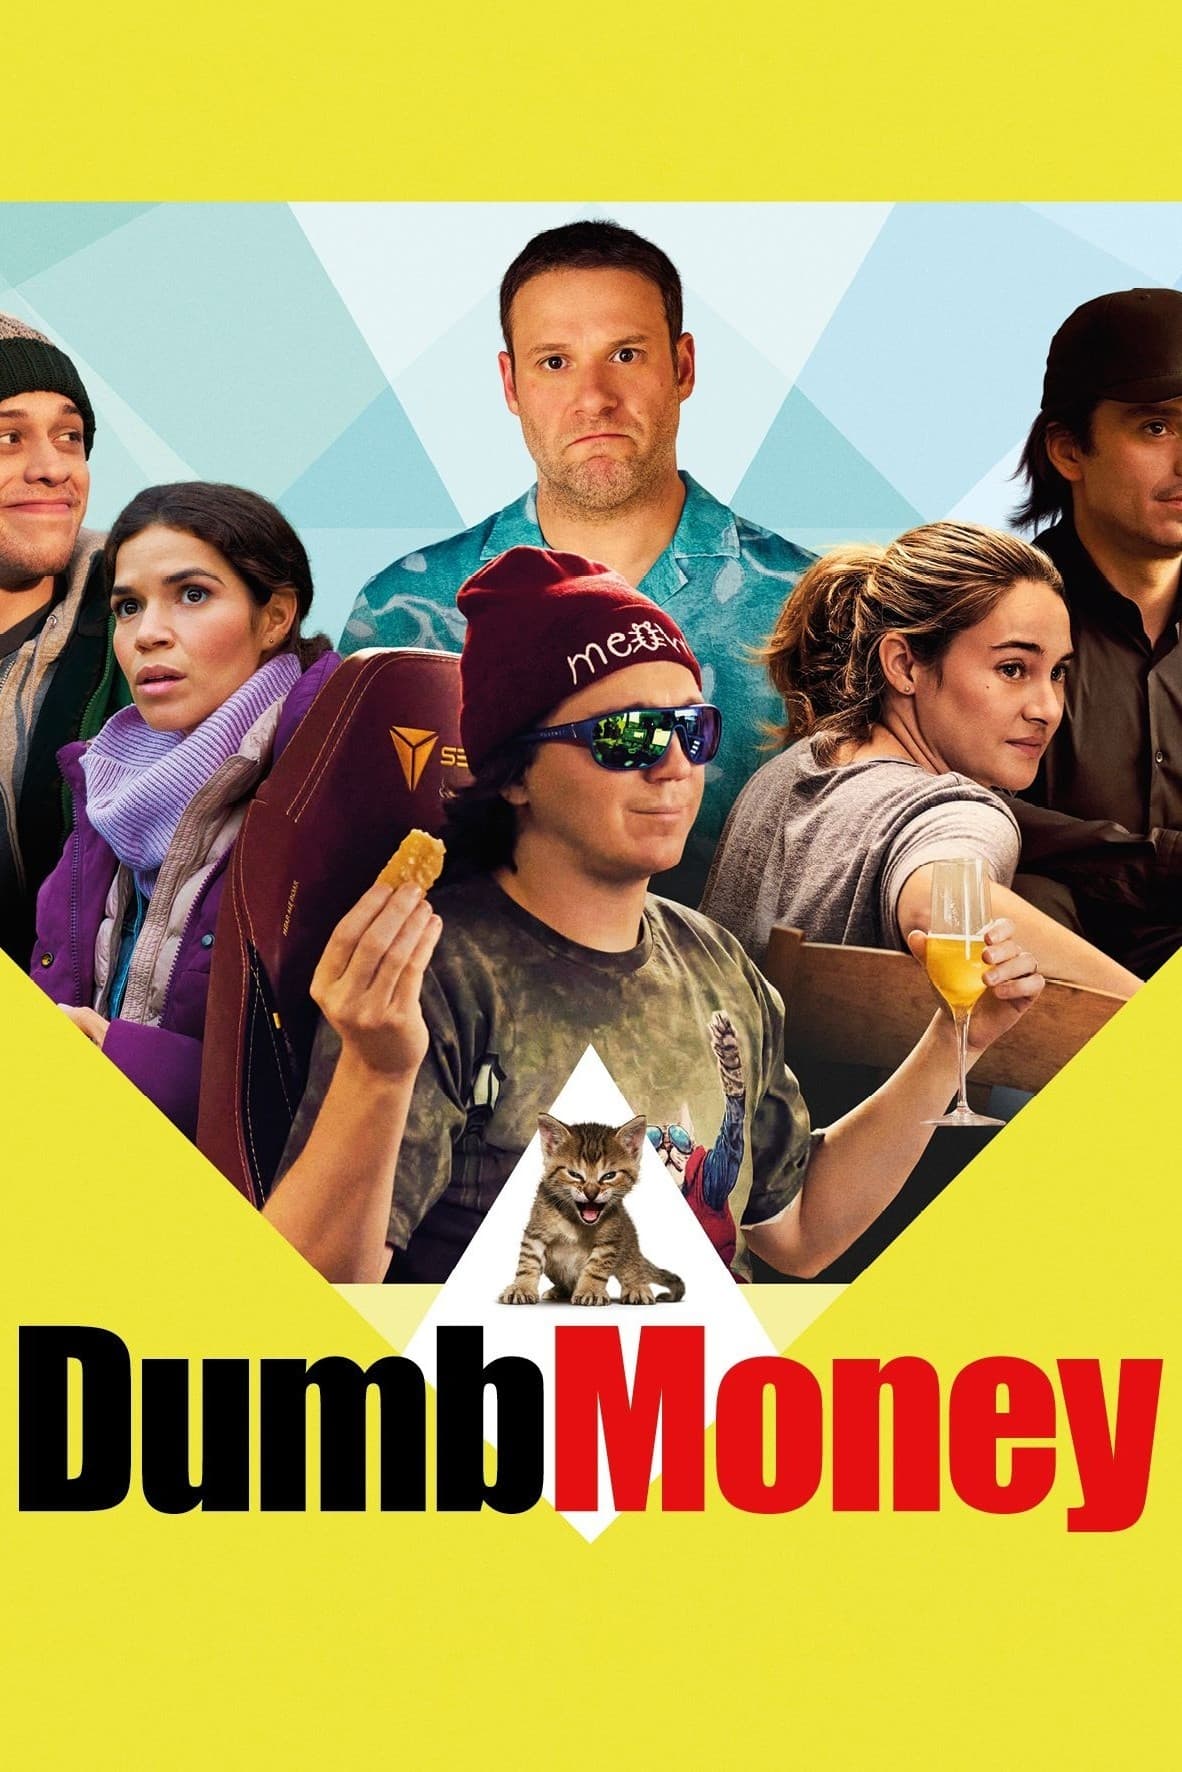 Dumb Money Movie poster